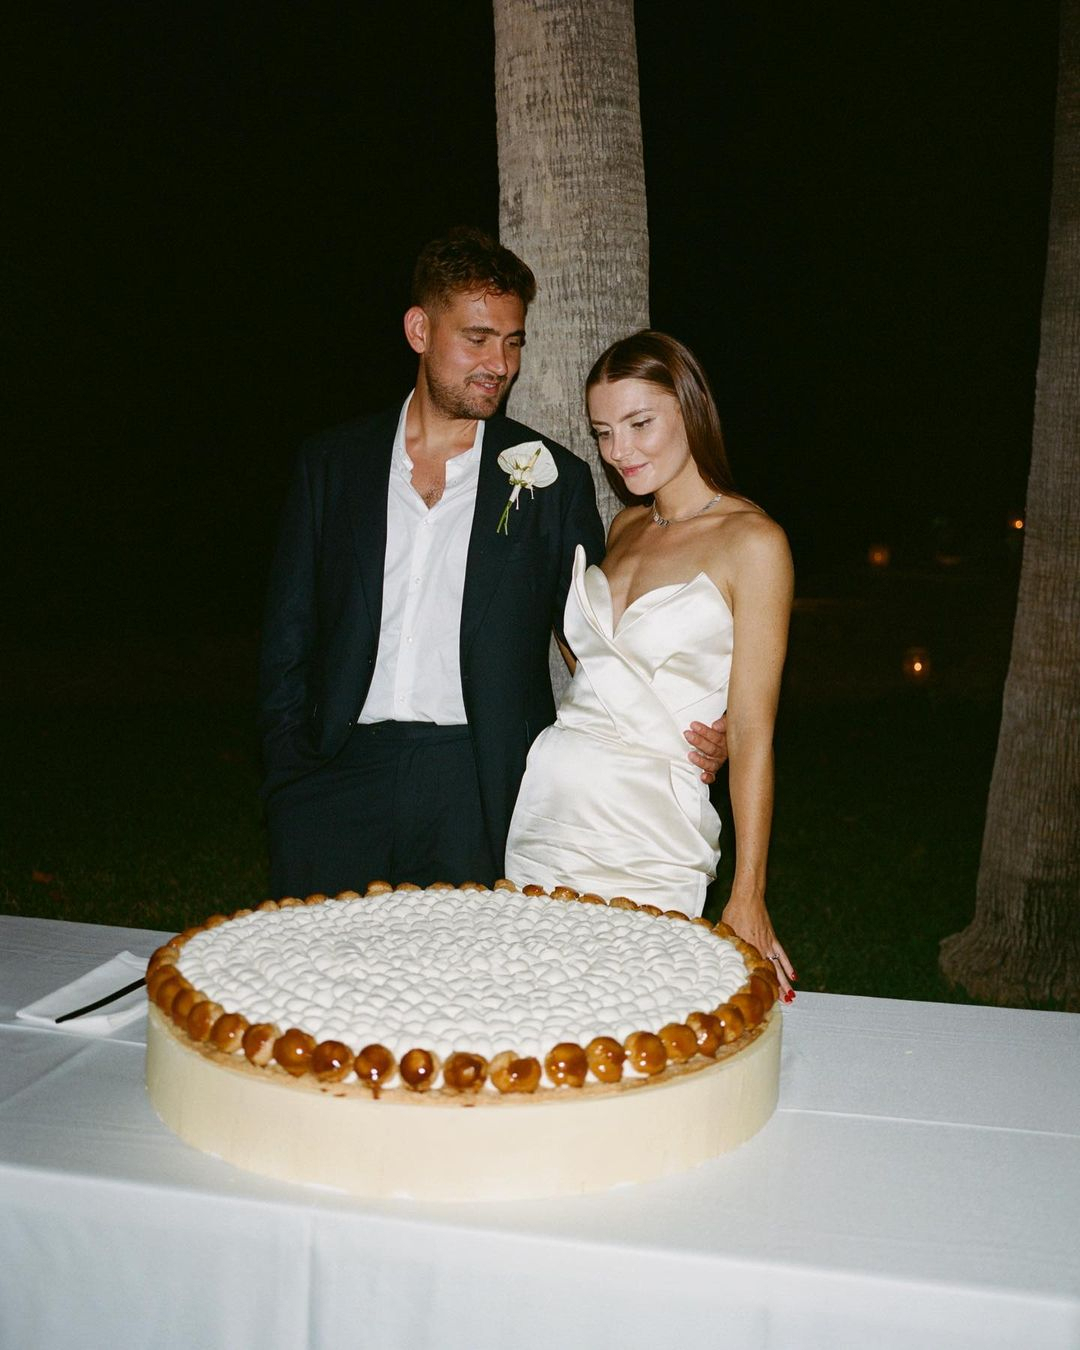 Wedding Cake Should Be Chocolate: The Bridal Cake – Savored Grace